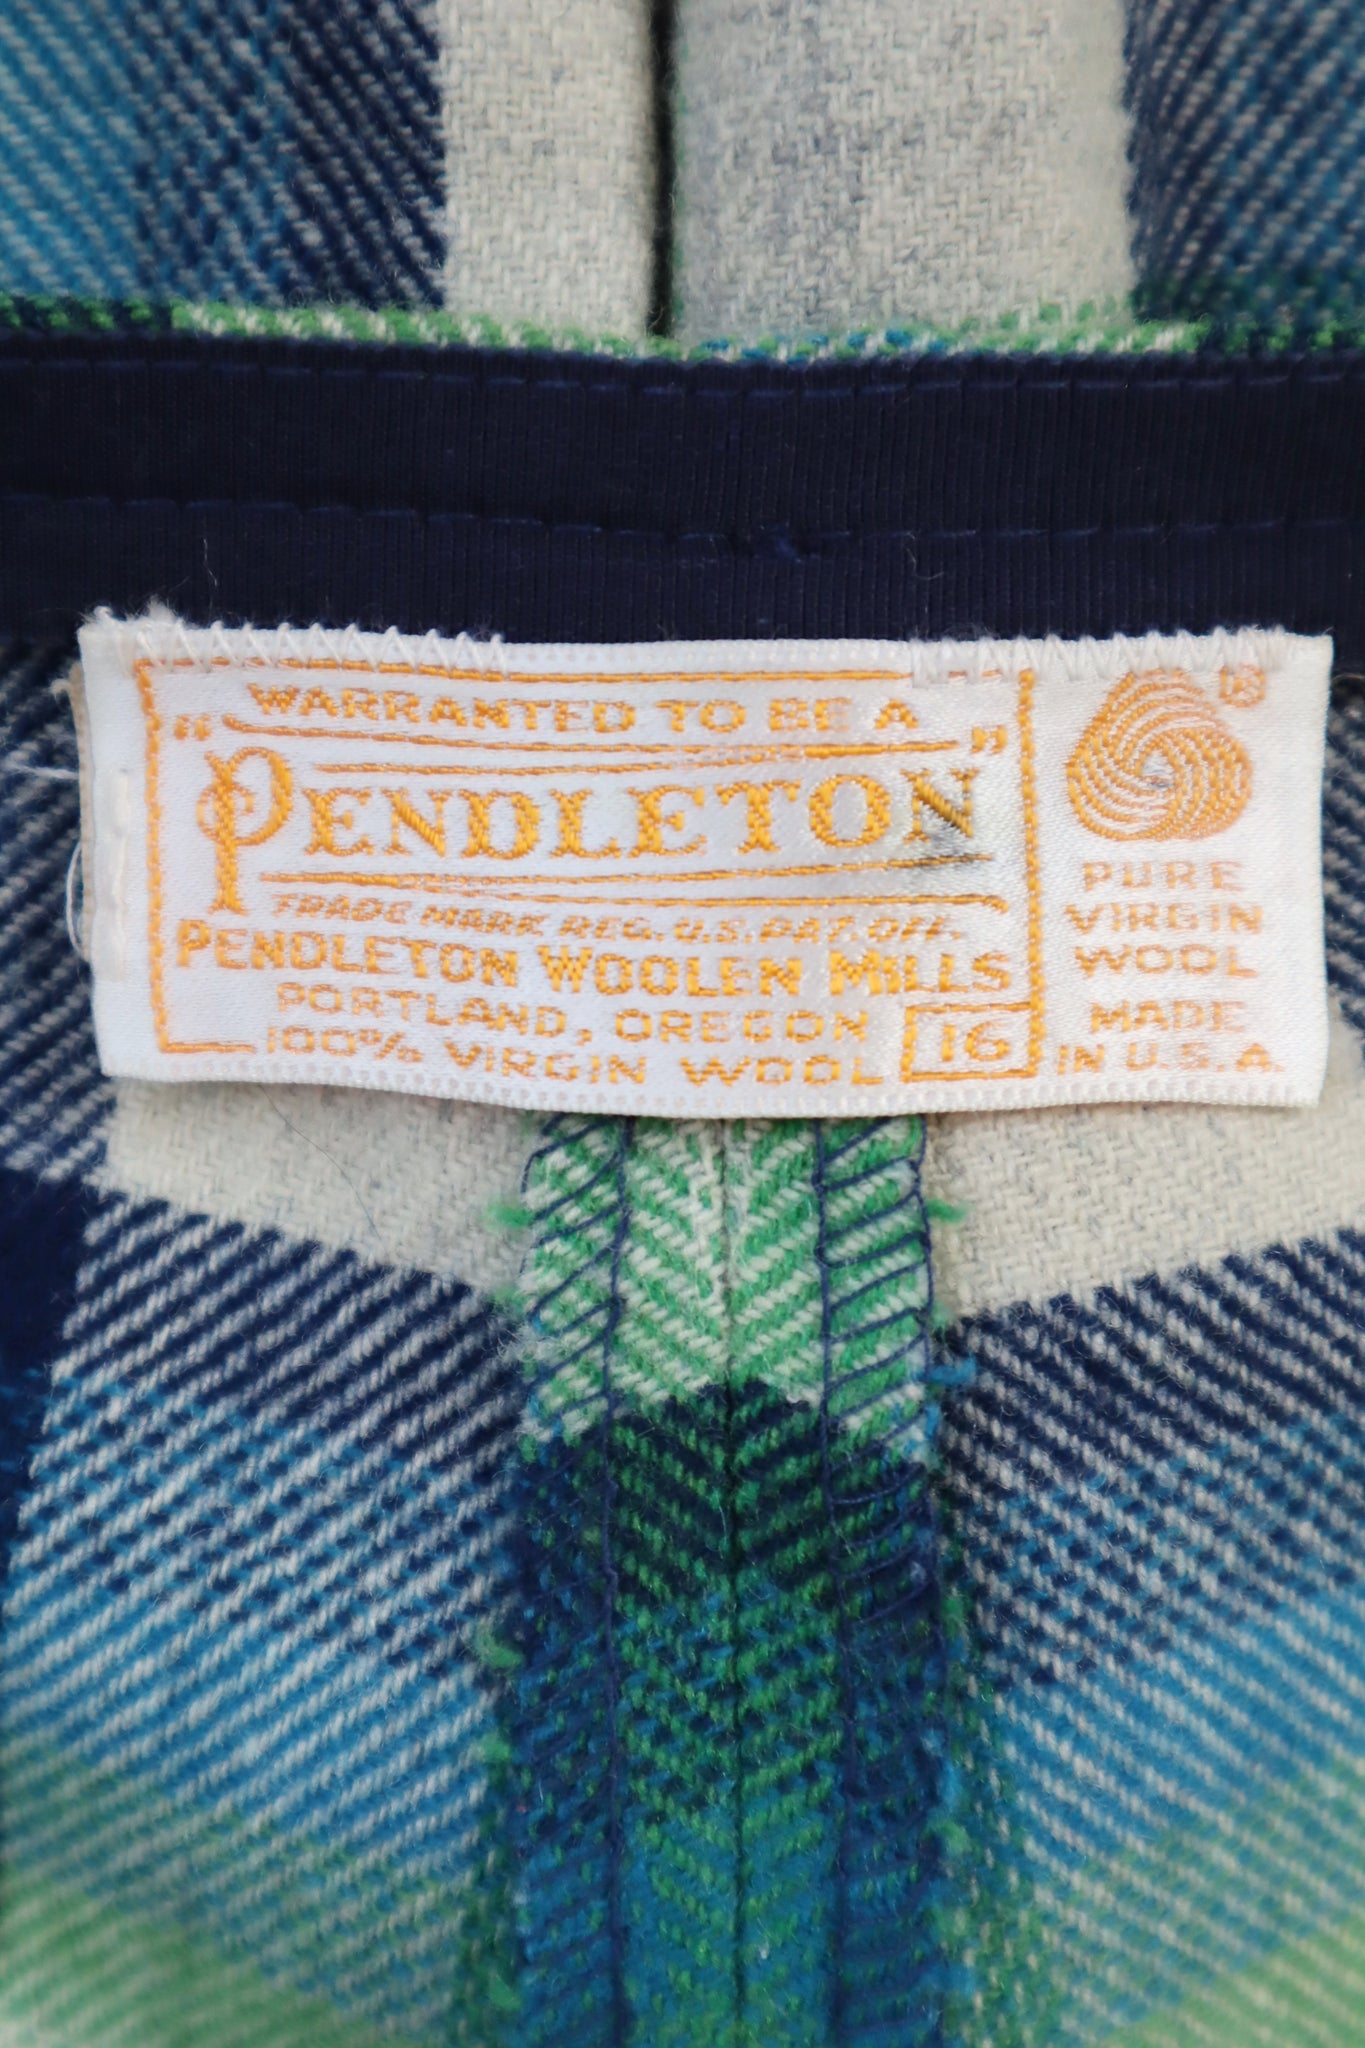 70s Pendleton Green Plaid Wool Pants